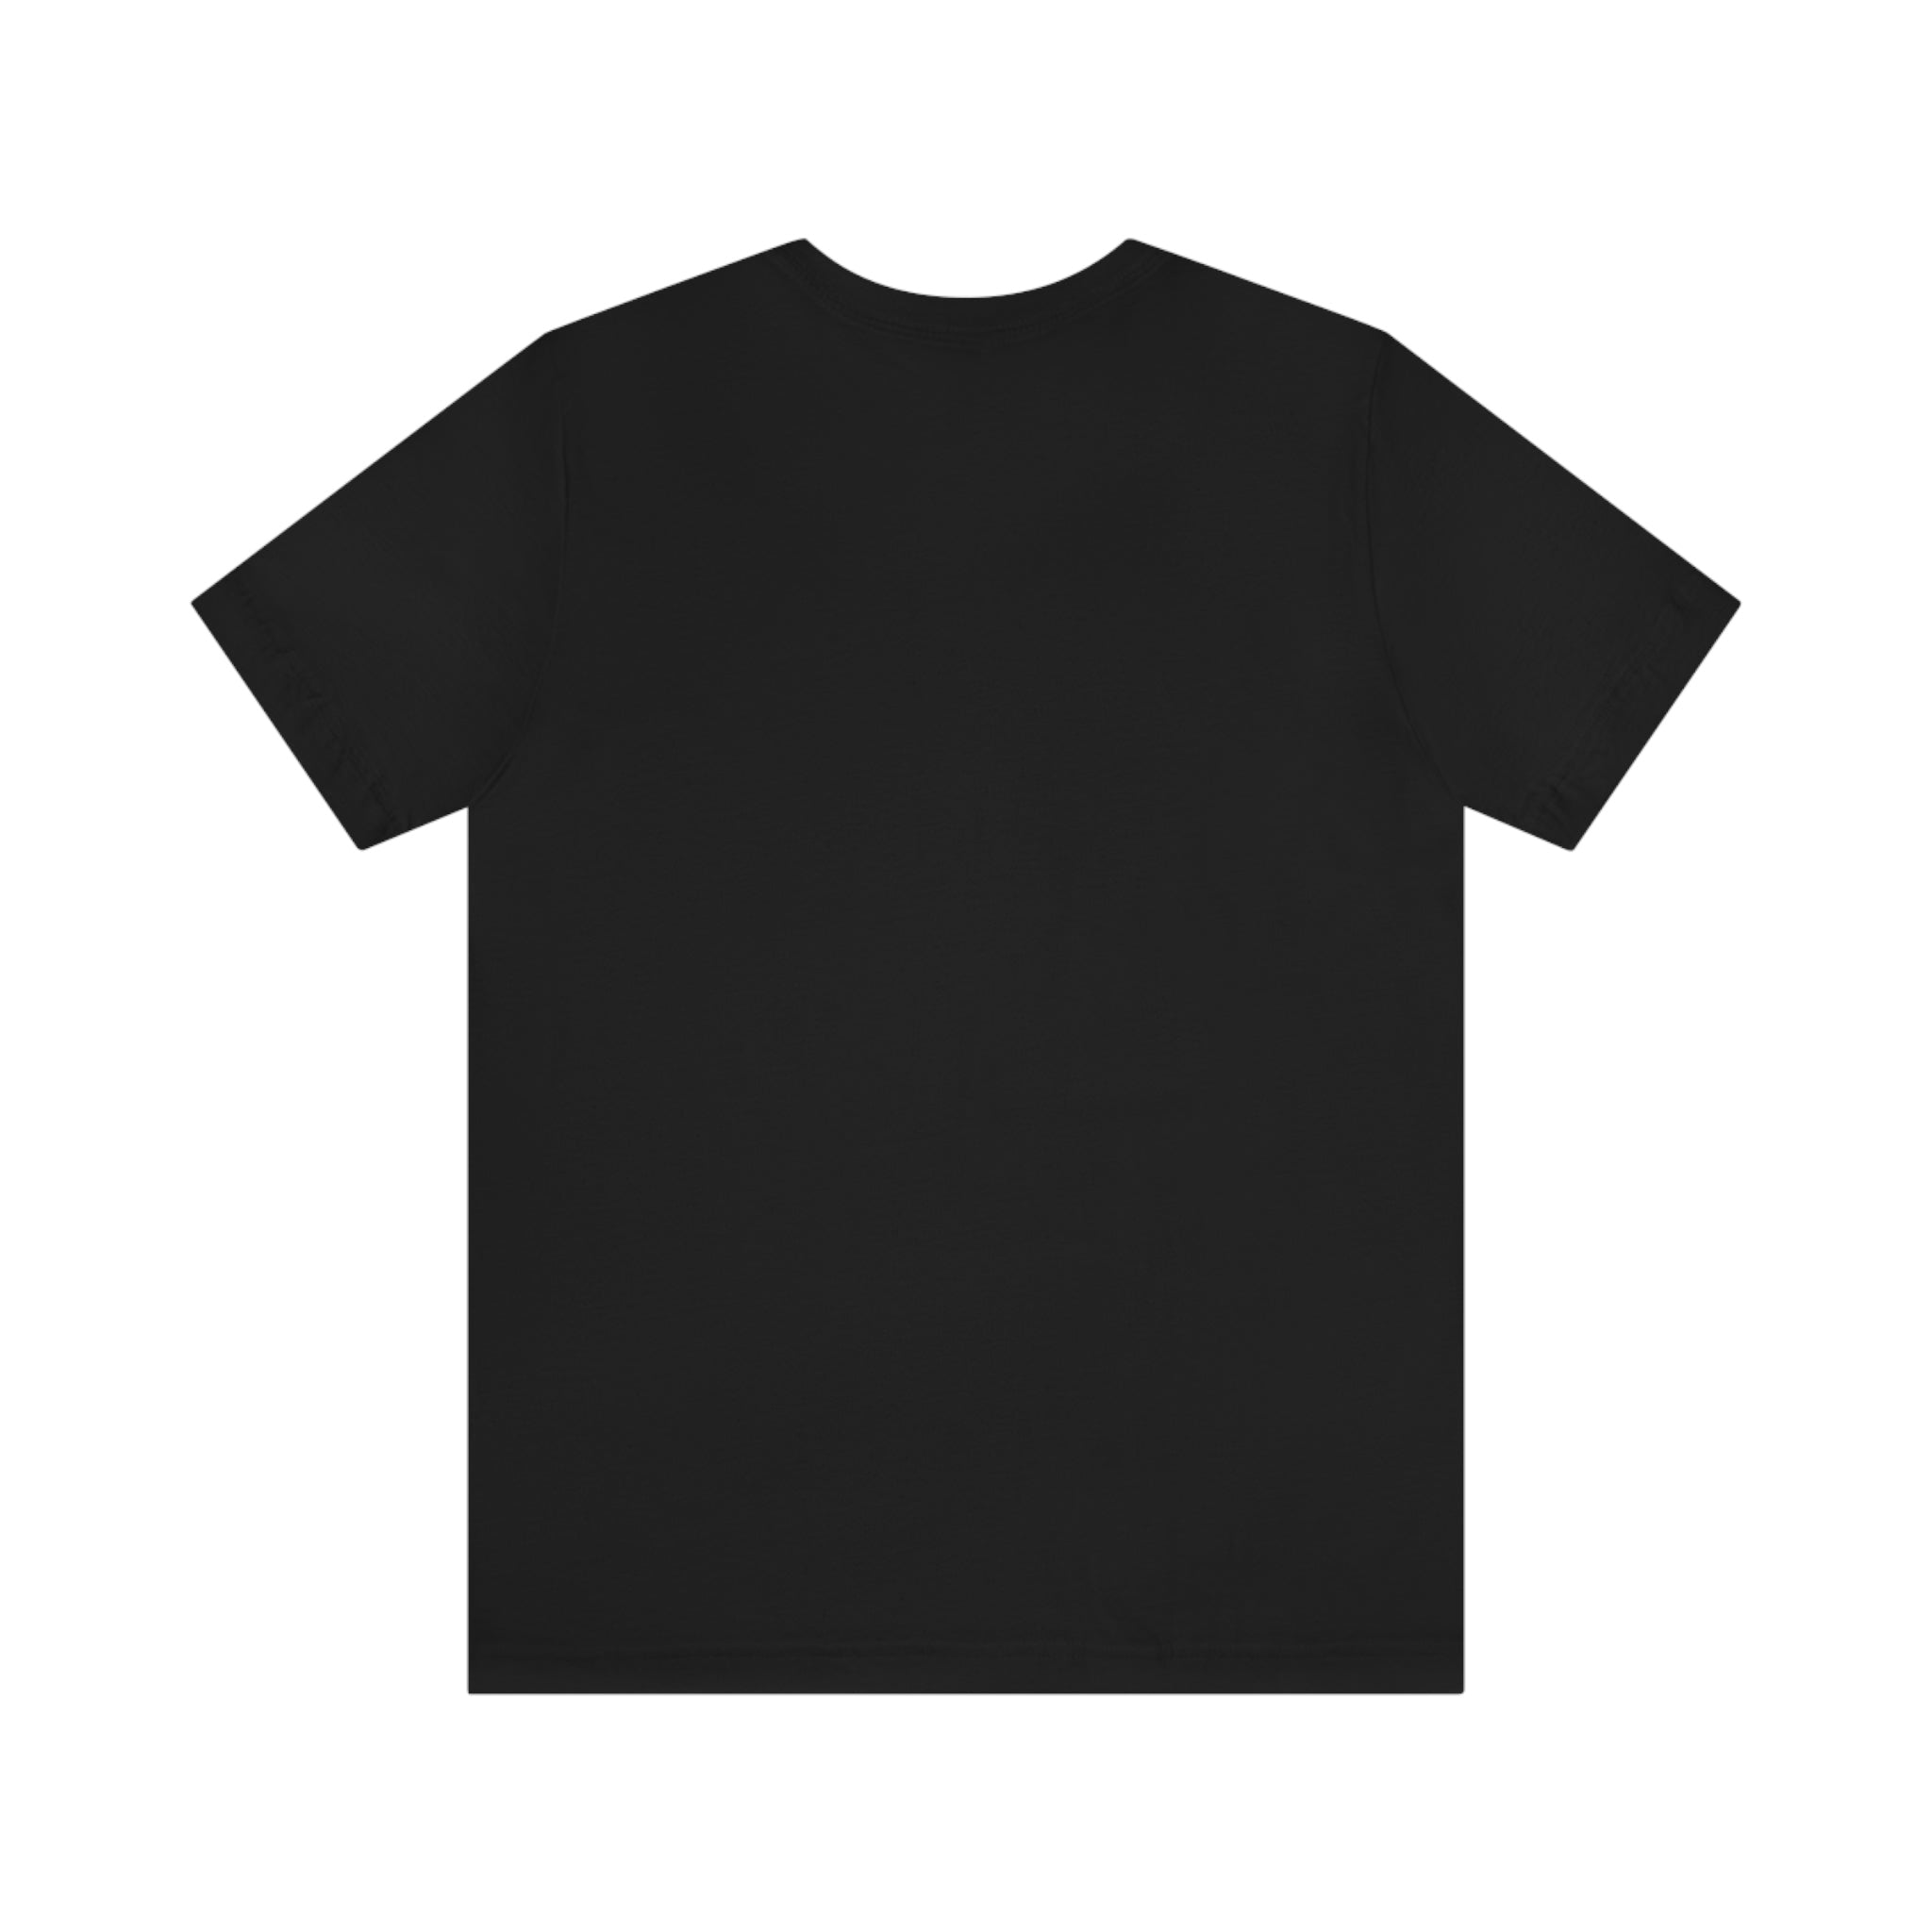 Black Jesus T-Shirt